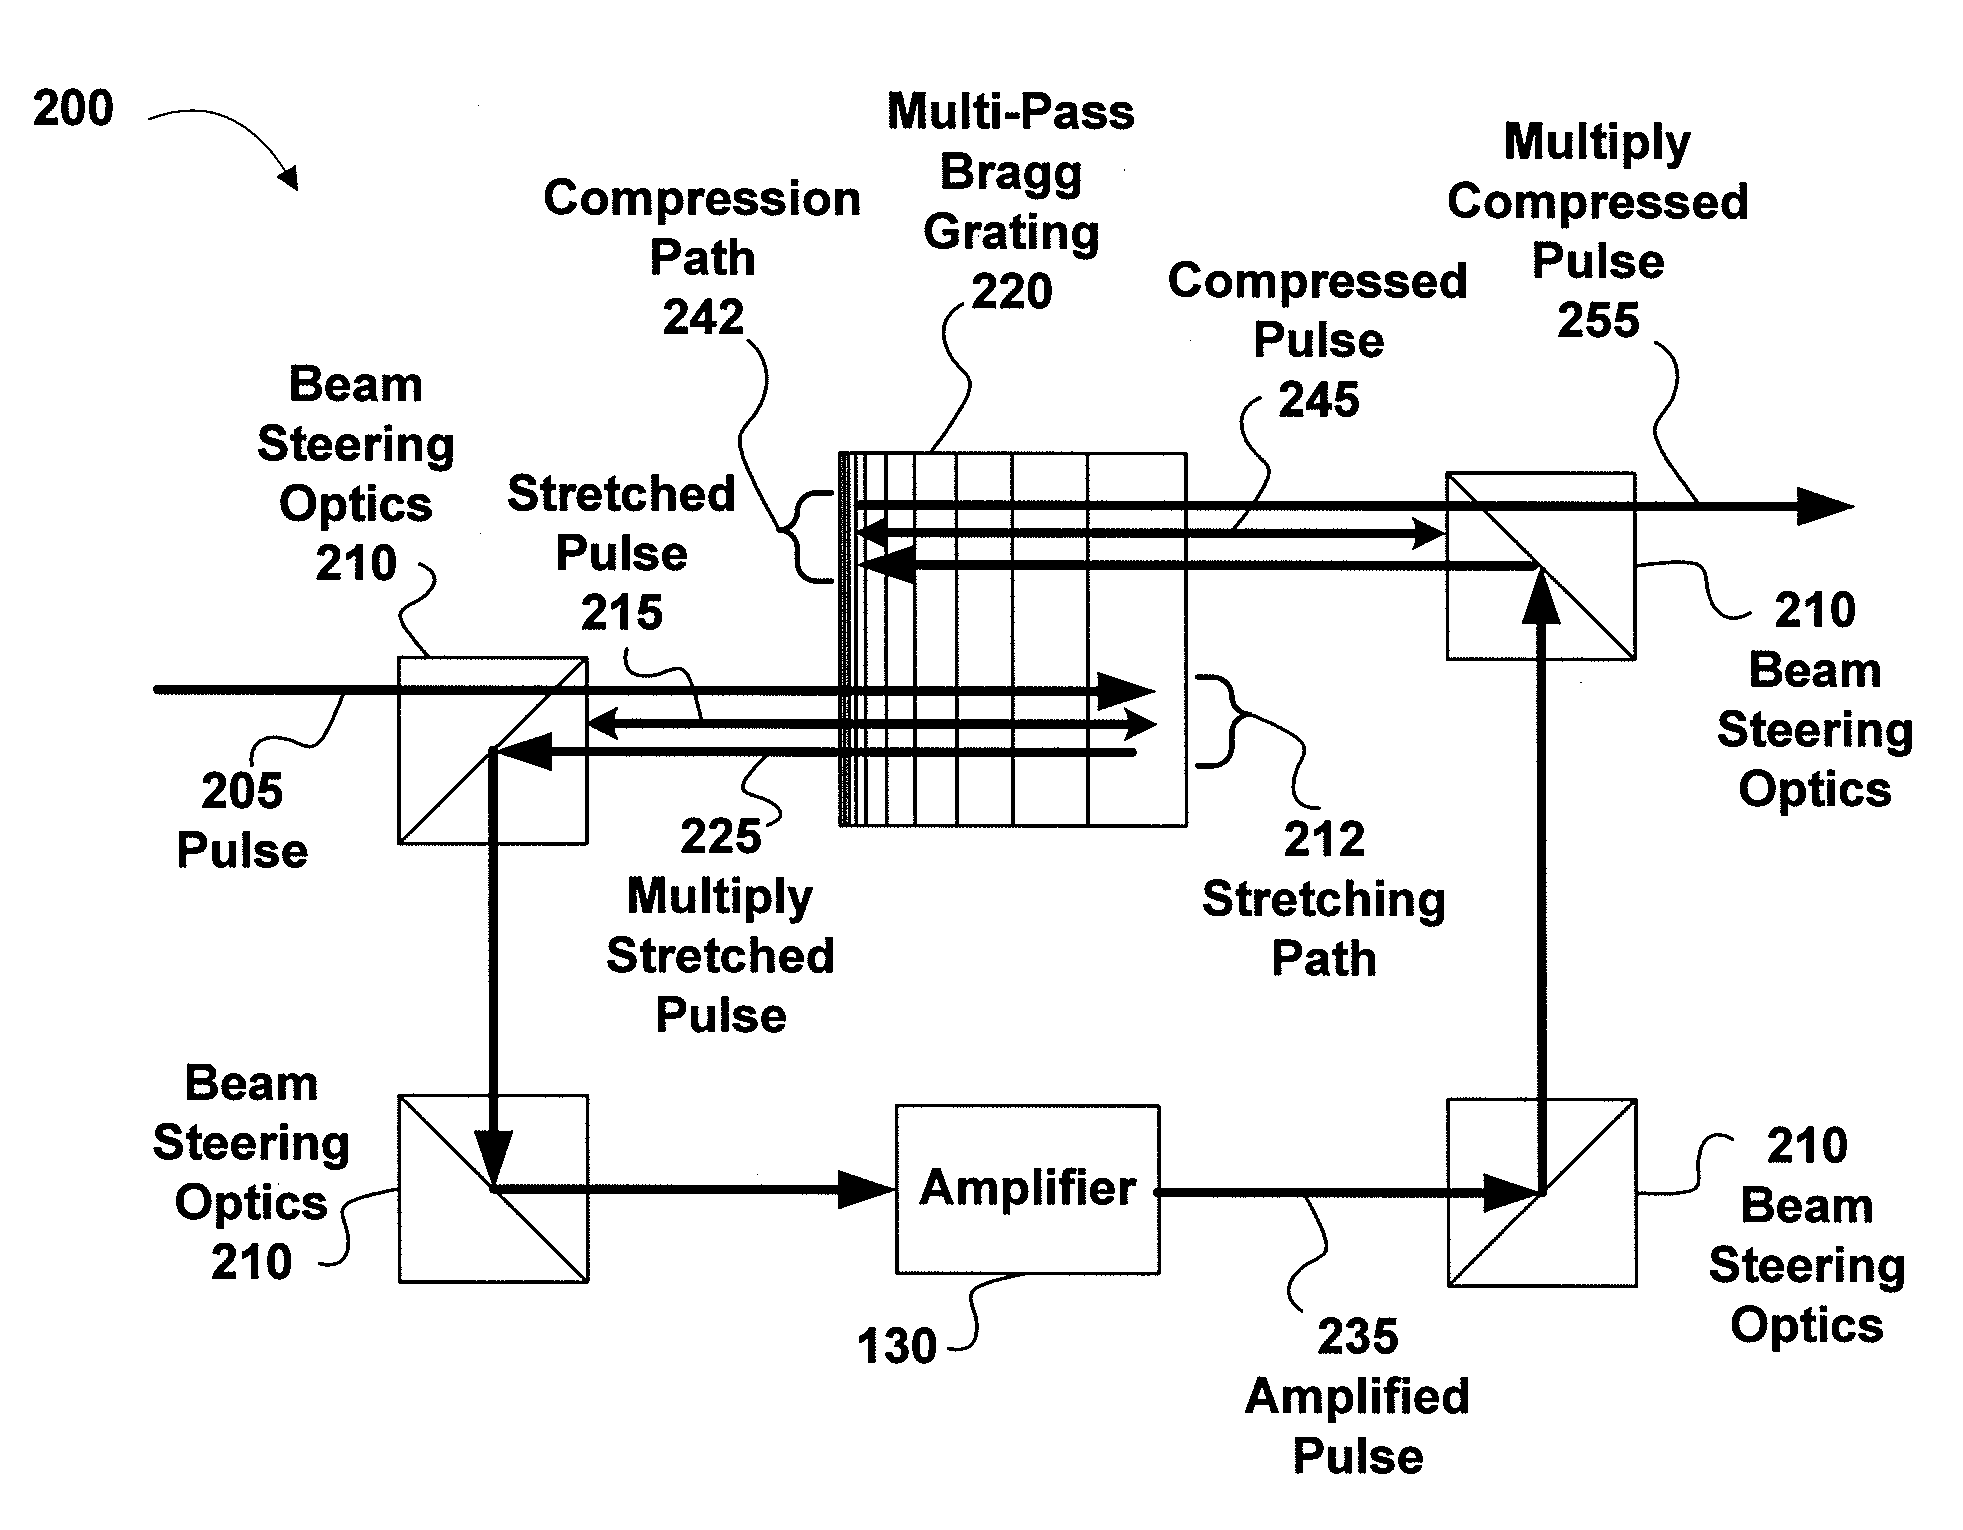 Pulse stretcher and compressor including a multi-pass Bragg grating